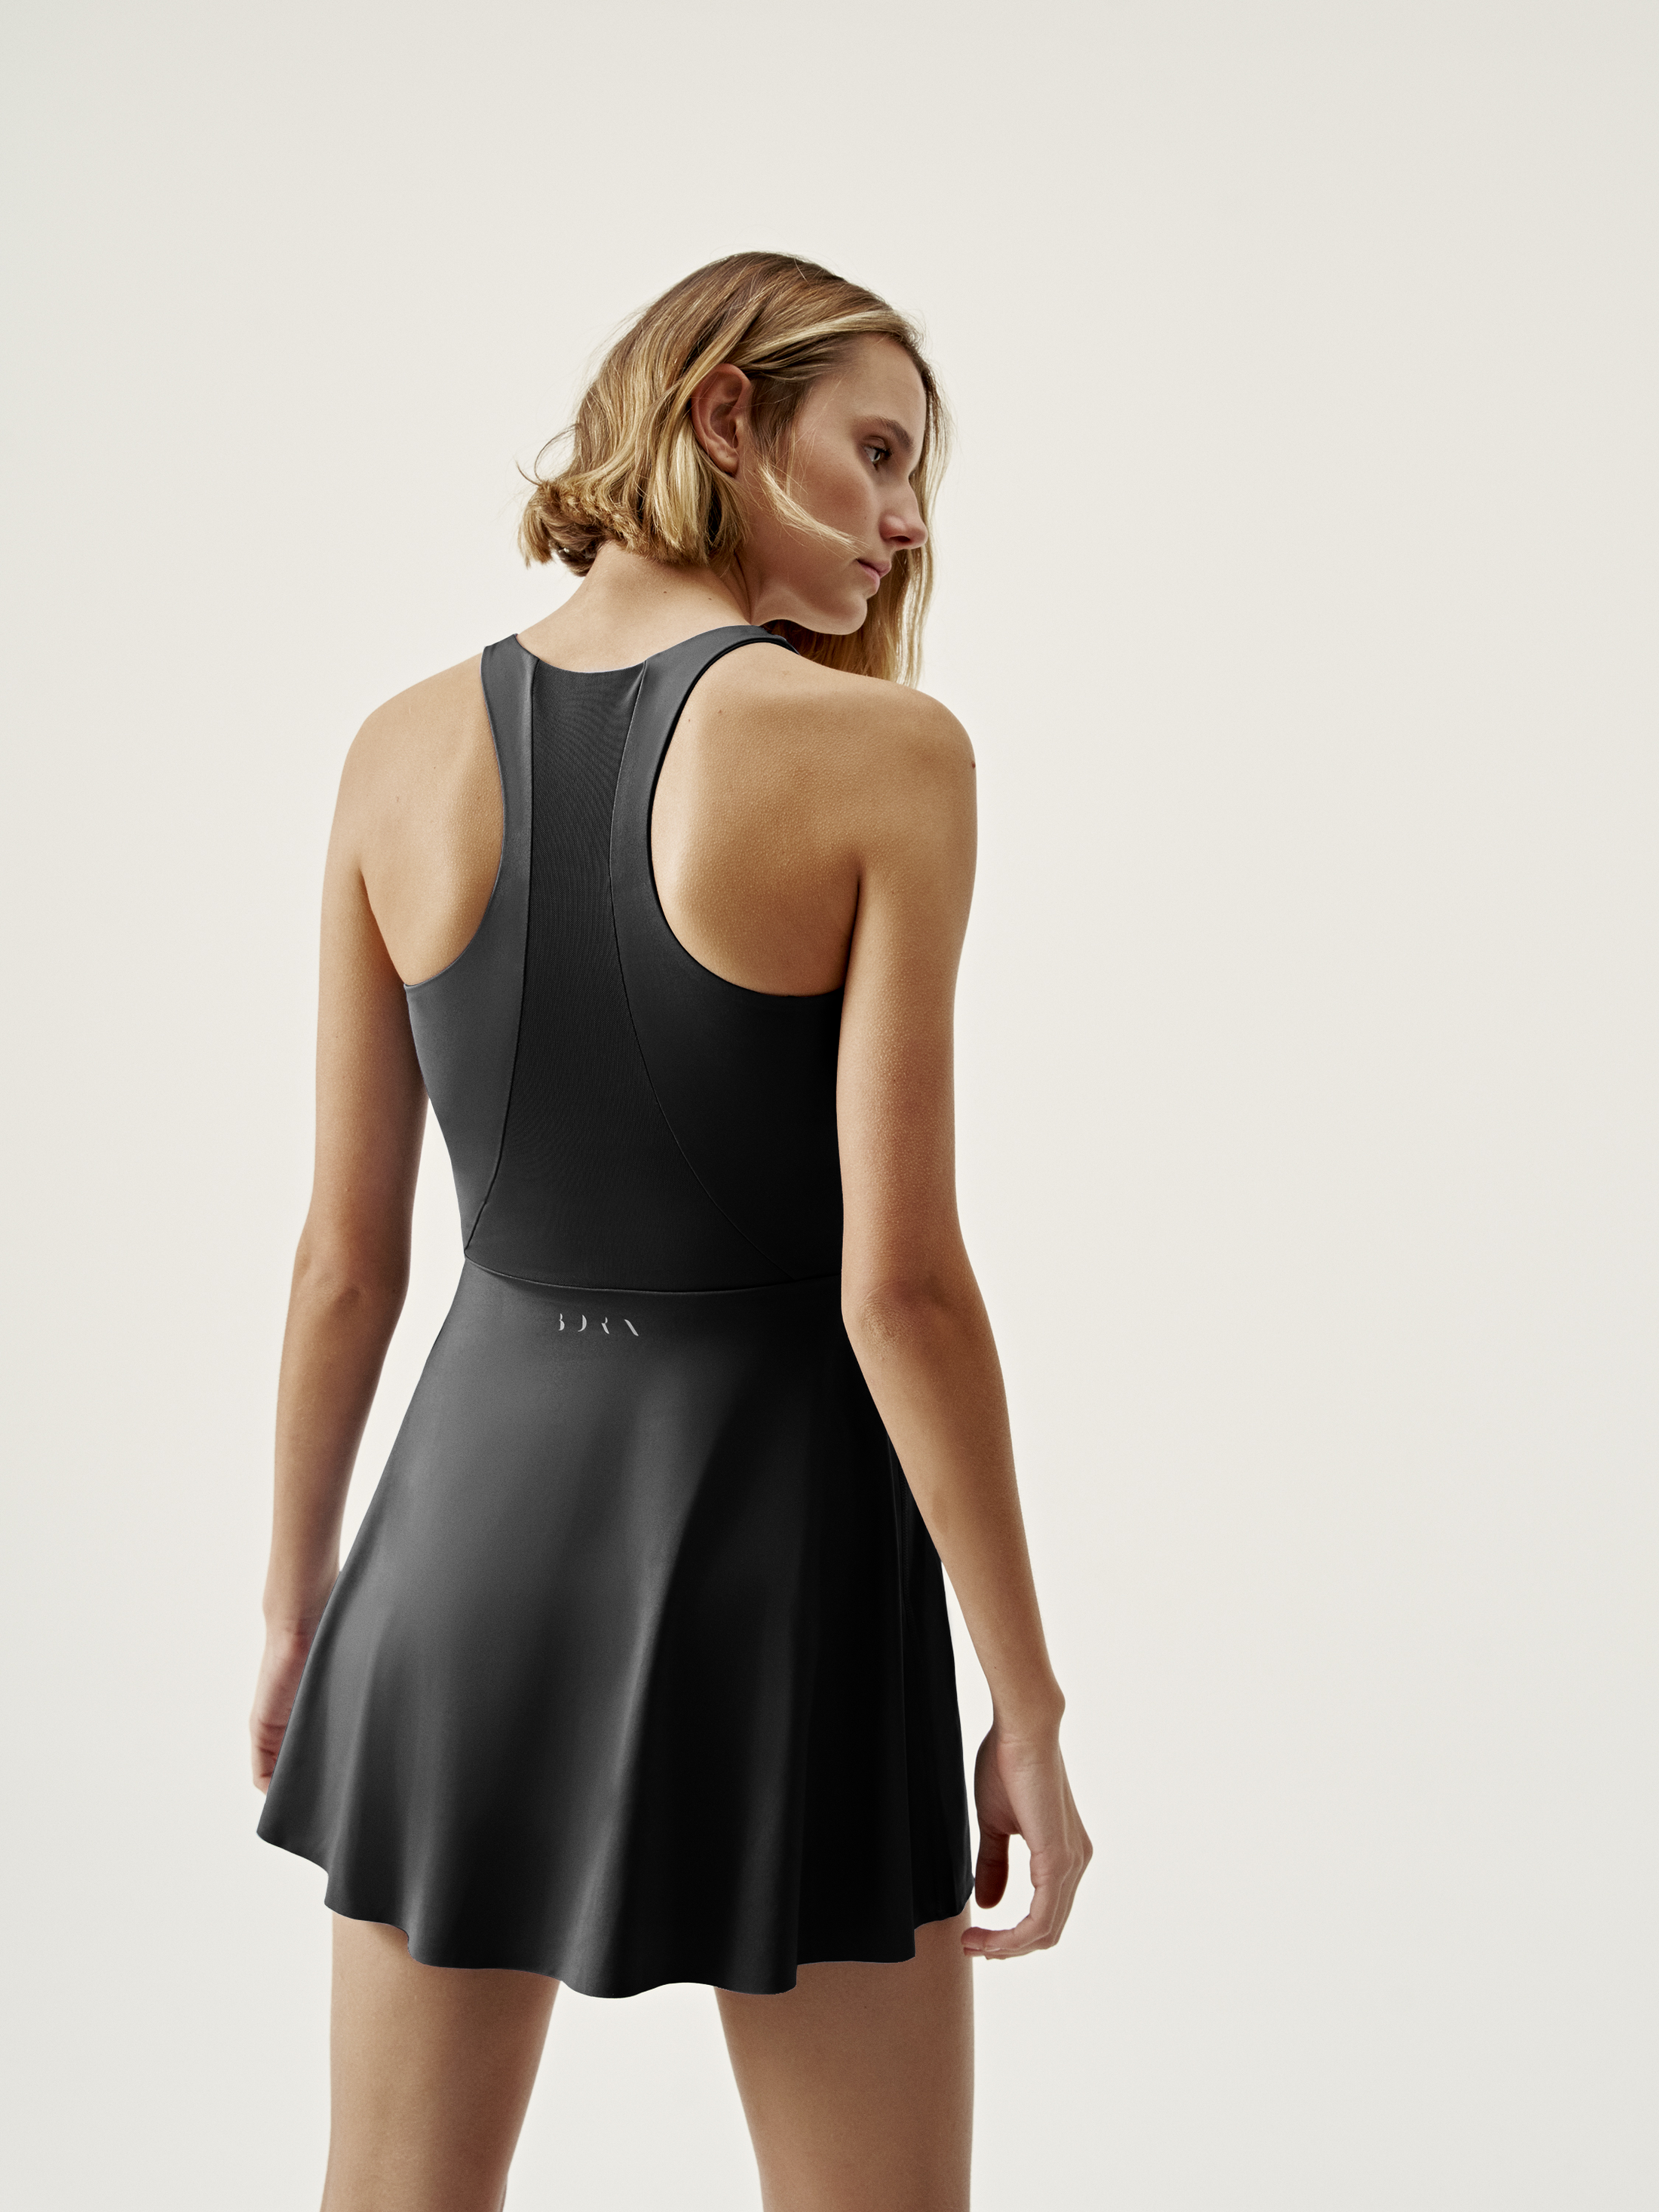 Garros Dress in Black